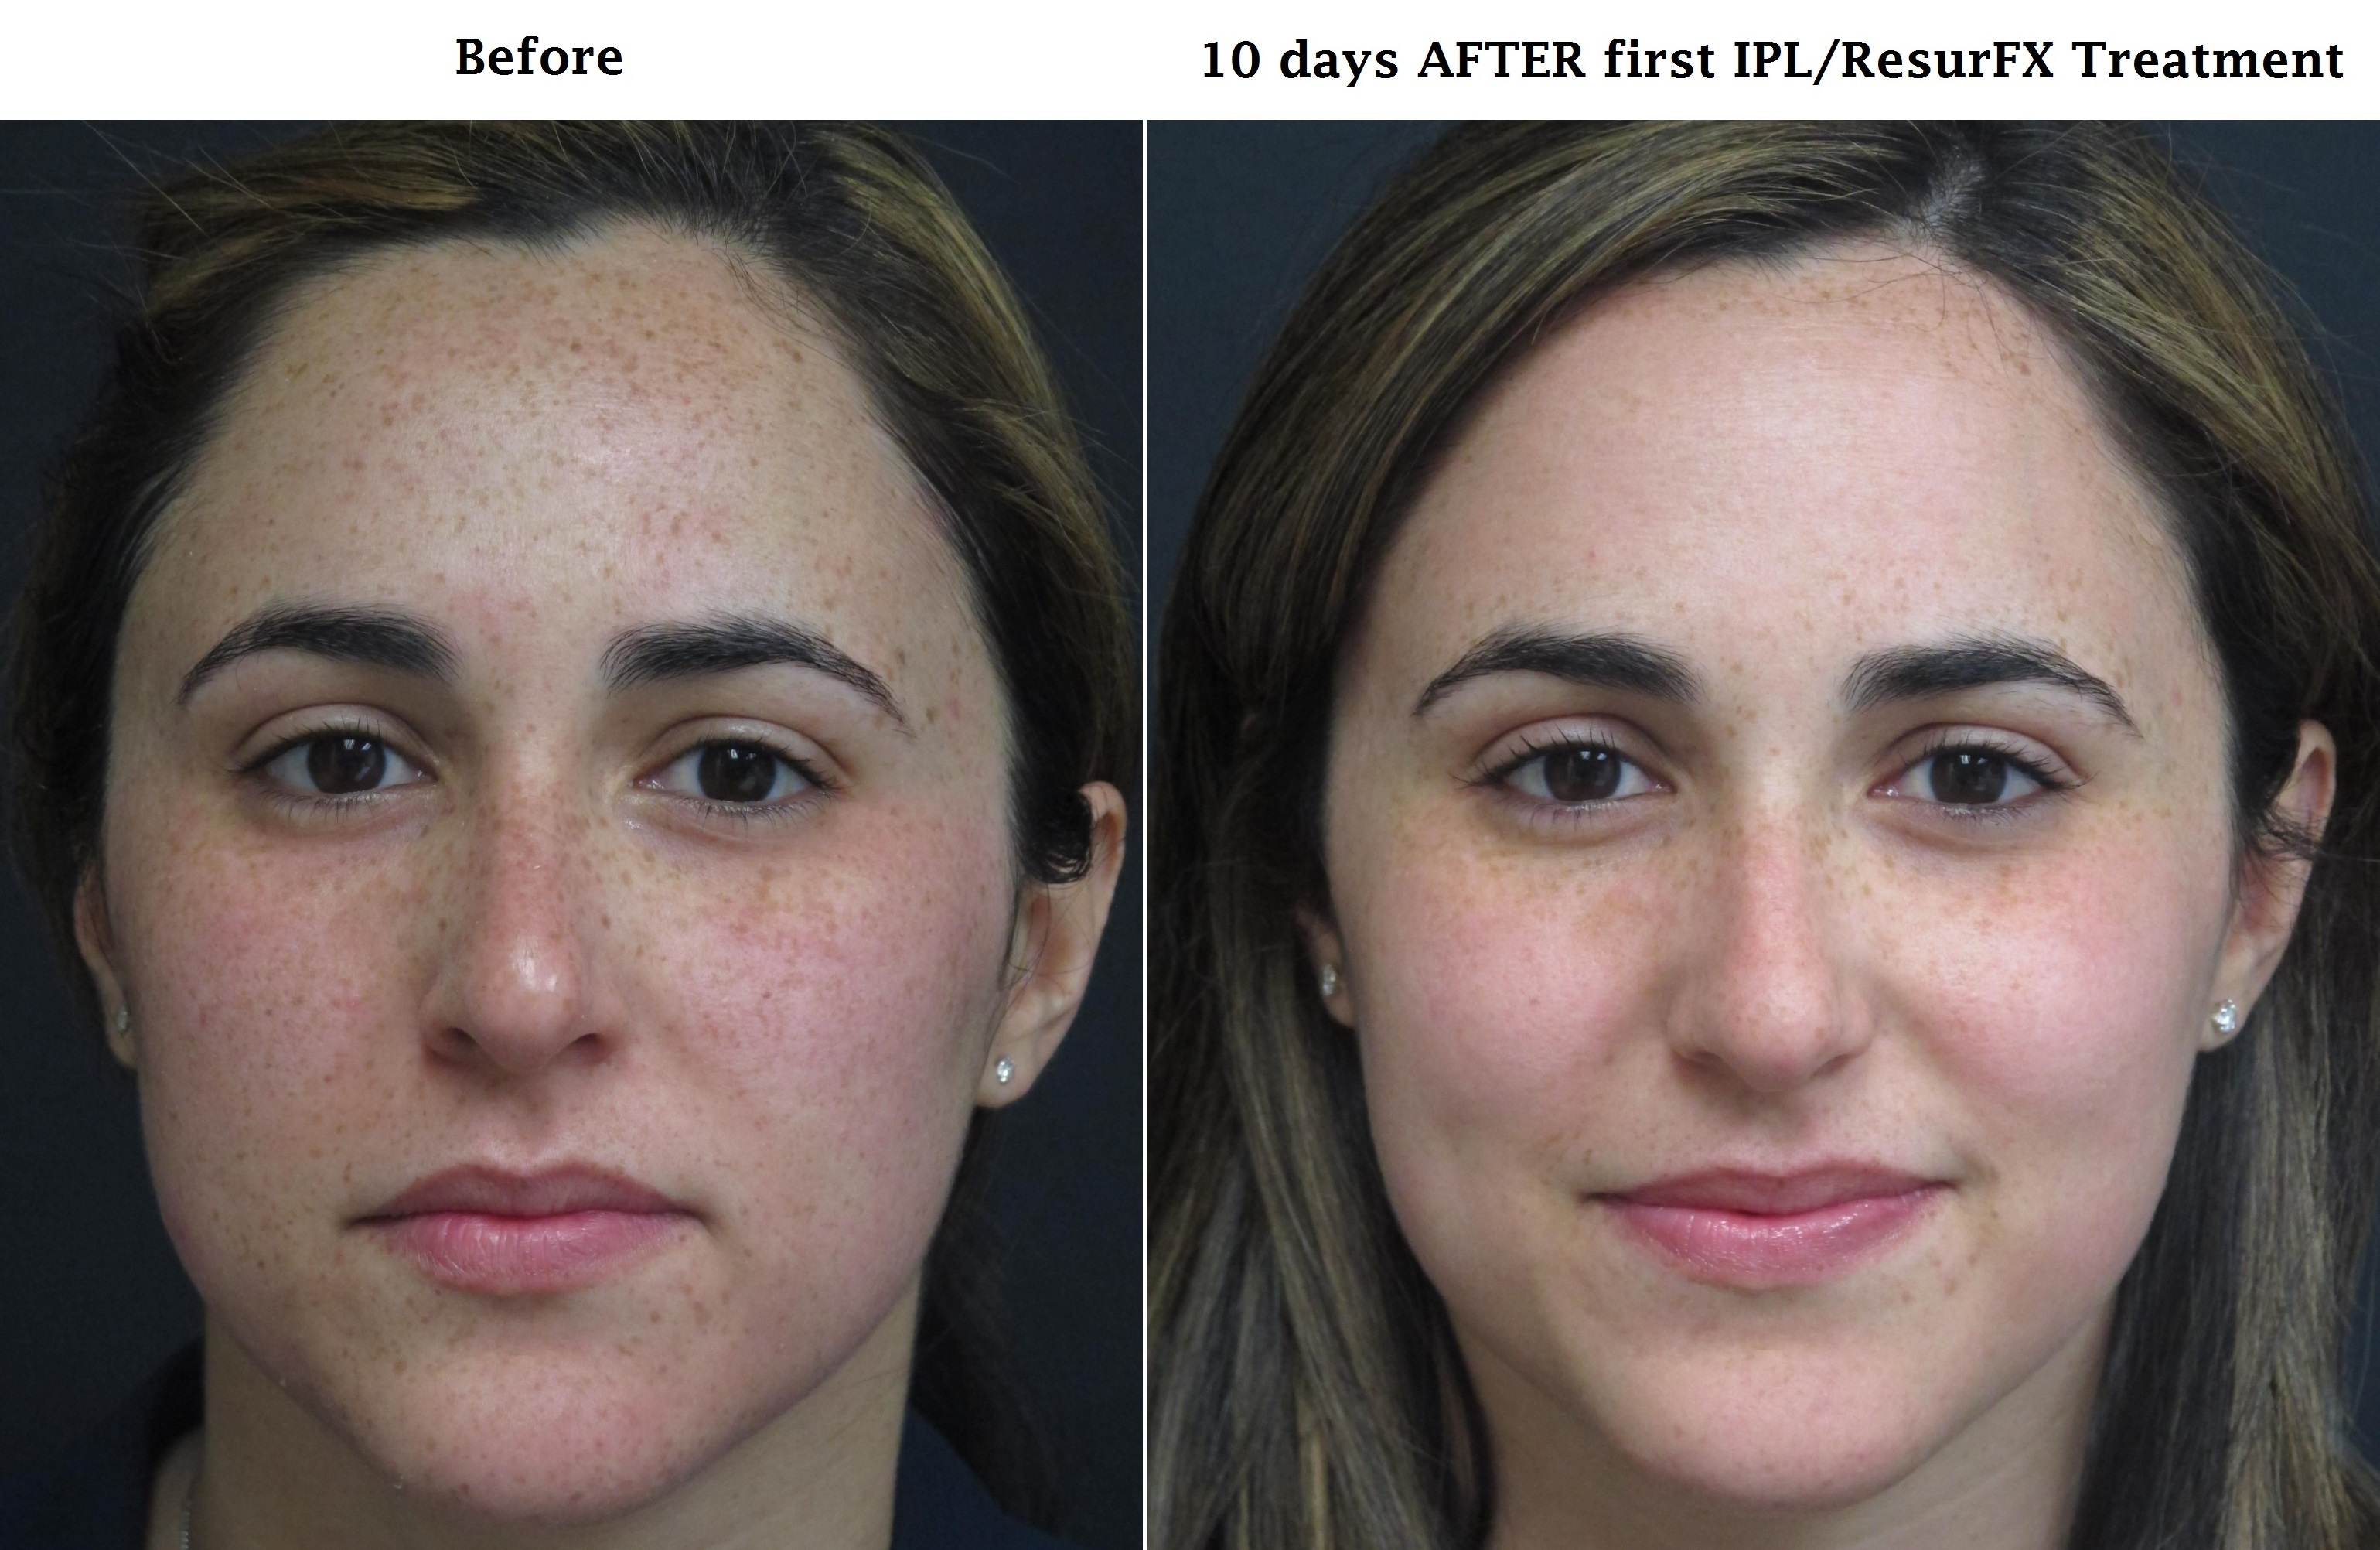 Before and After IPL/ResurFX - Central Florida Dermatology. 